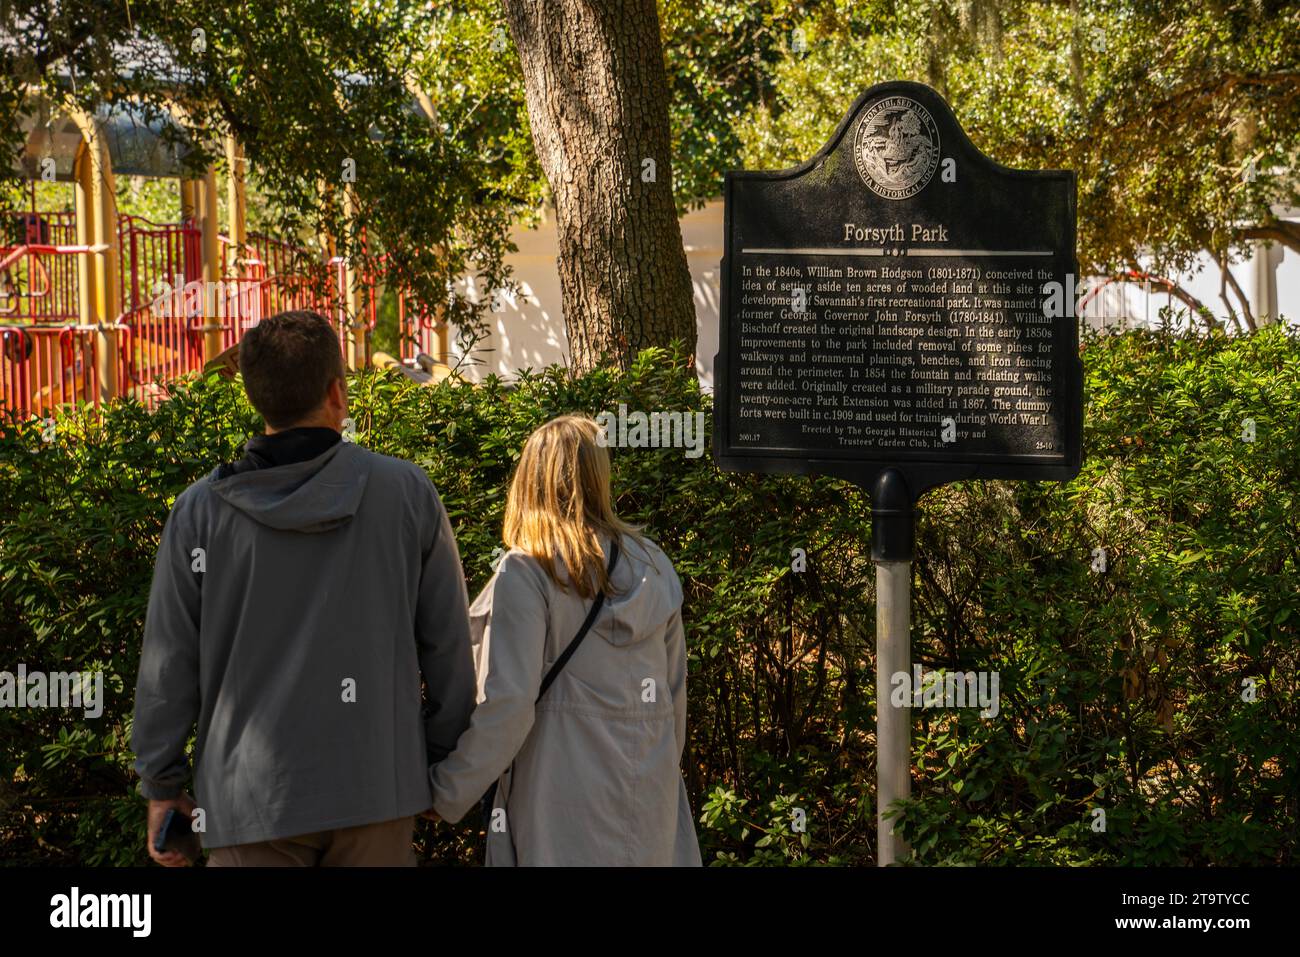 Forsyth Park information plaque in Savannah Georgia Stock Photo